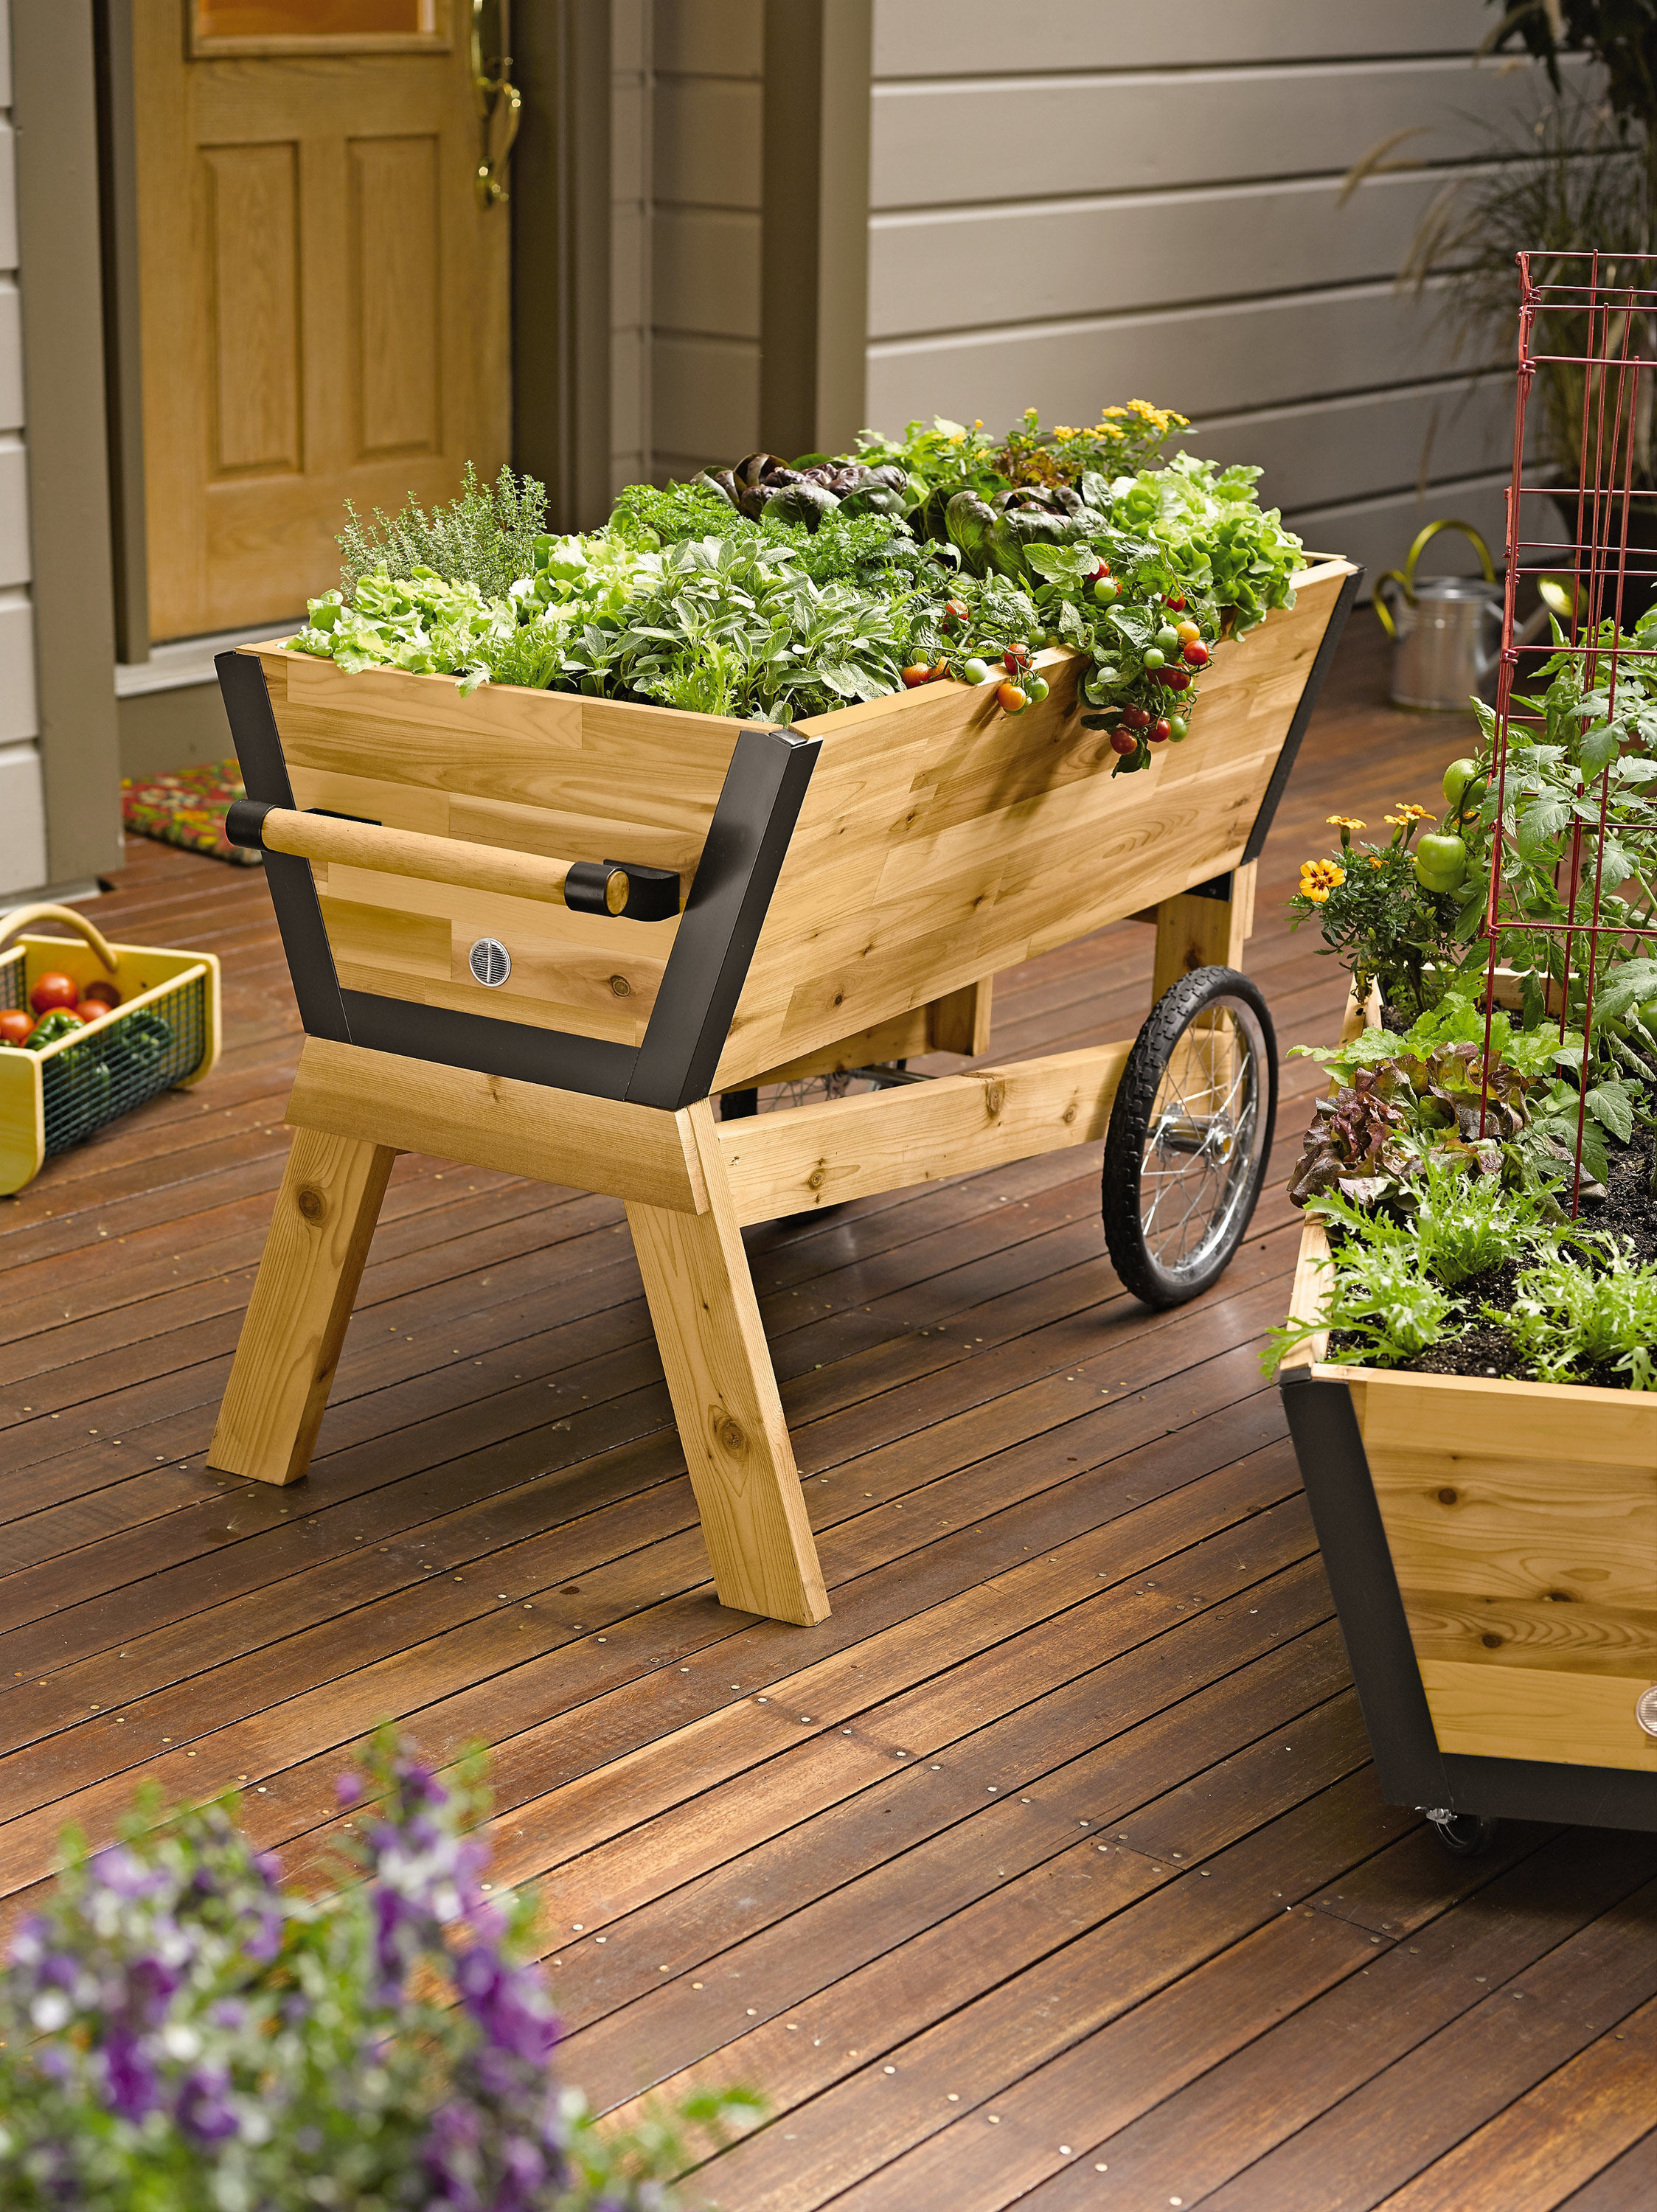 Best ideas about Garden Planter Box
. Save or Pin Window Boxes Flower Boxes Window Box Planters Now.